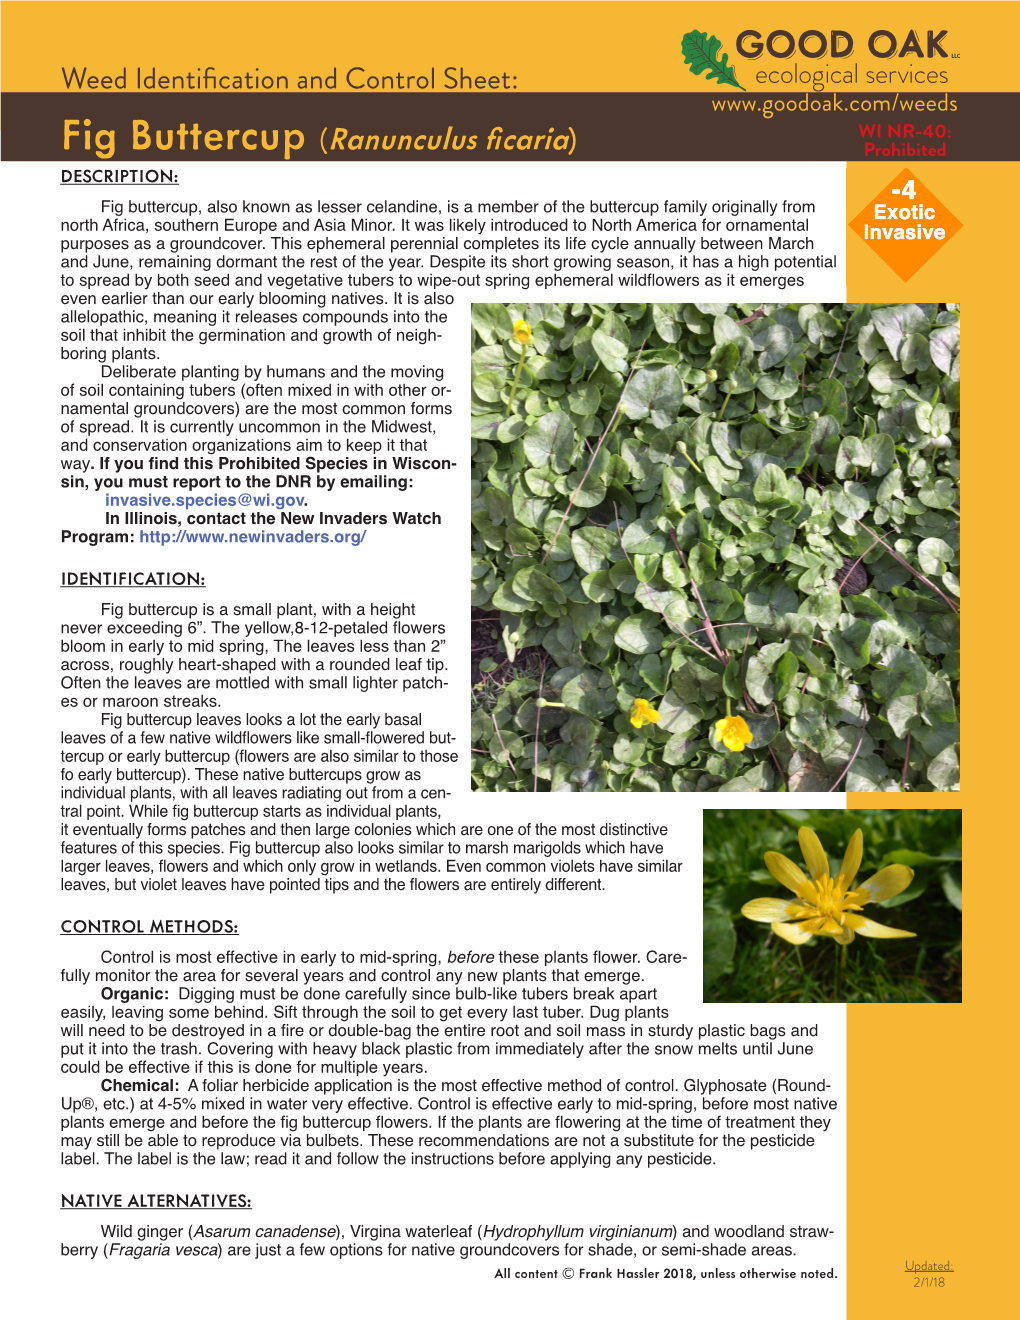 Fig Buttercup (Ranunculus Ficaria) Prohibited DESCRIPTION